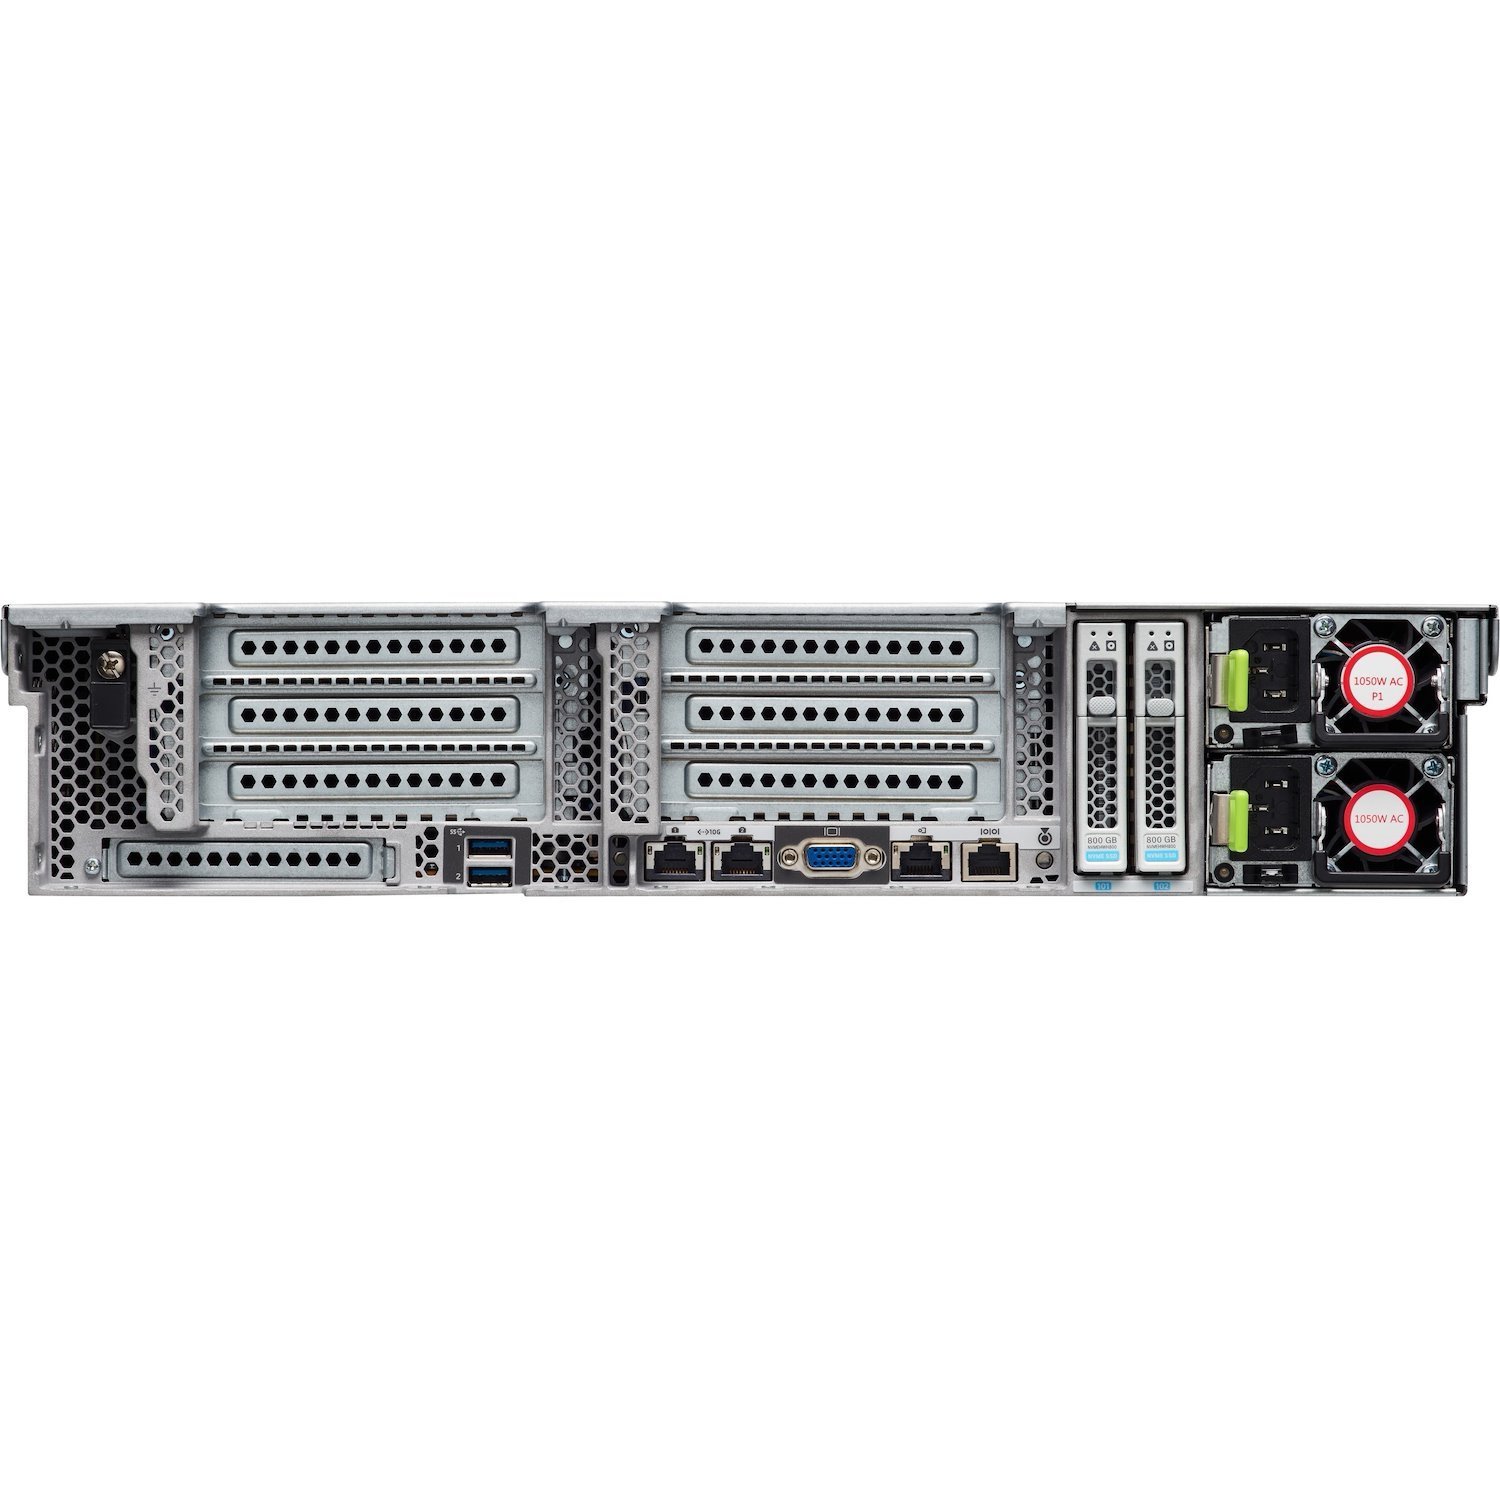 Cisco C240 M5 2U Rack Server - 2 x Intel Xeon Silver 4110 2.10 GHz - 96 GB RAM - 12Gb/s SAS Controller